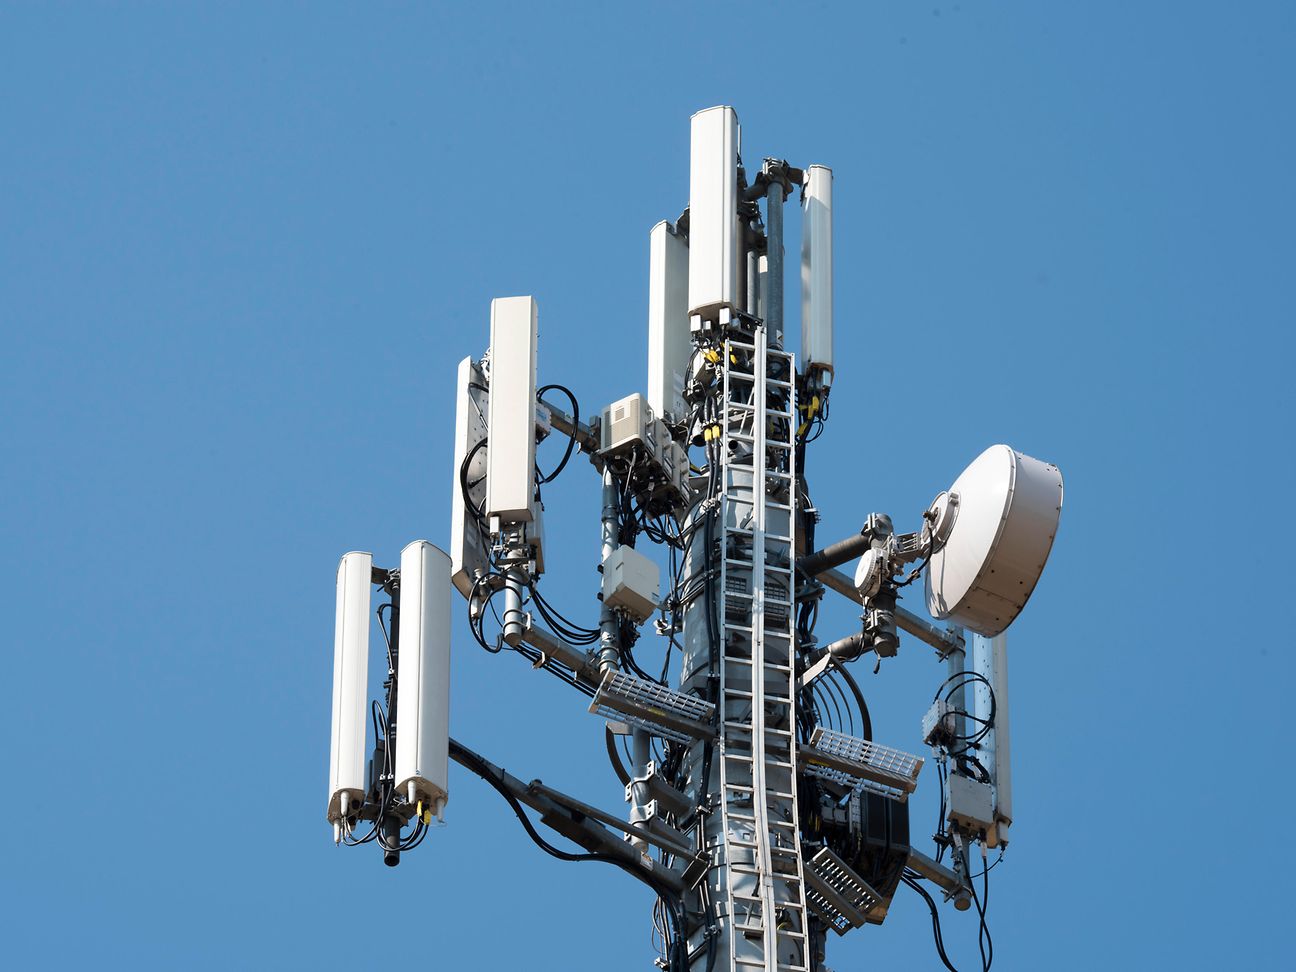 Test Mobilfunknetz: Testsieger Telekom trotz Funklöcher